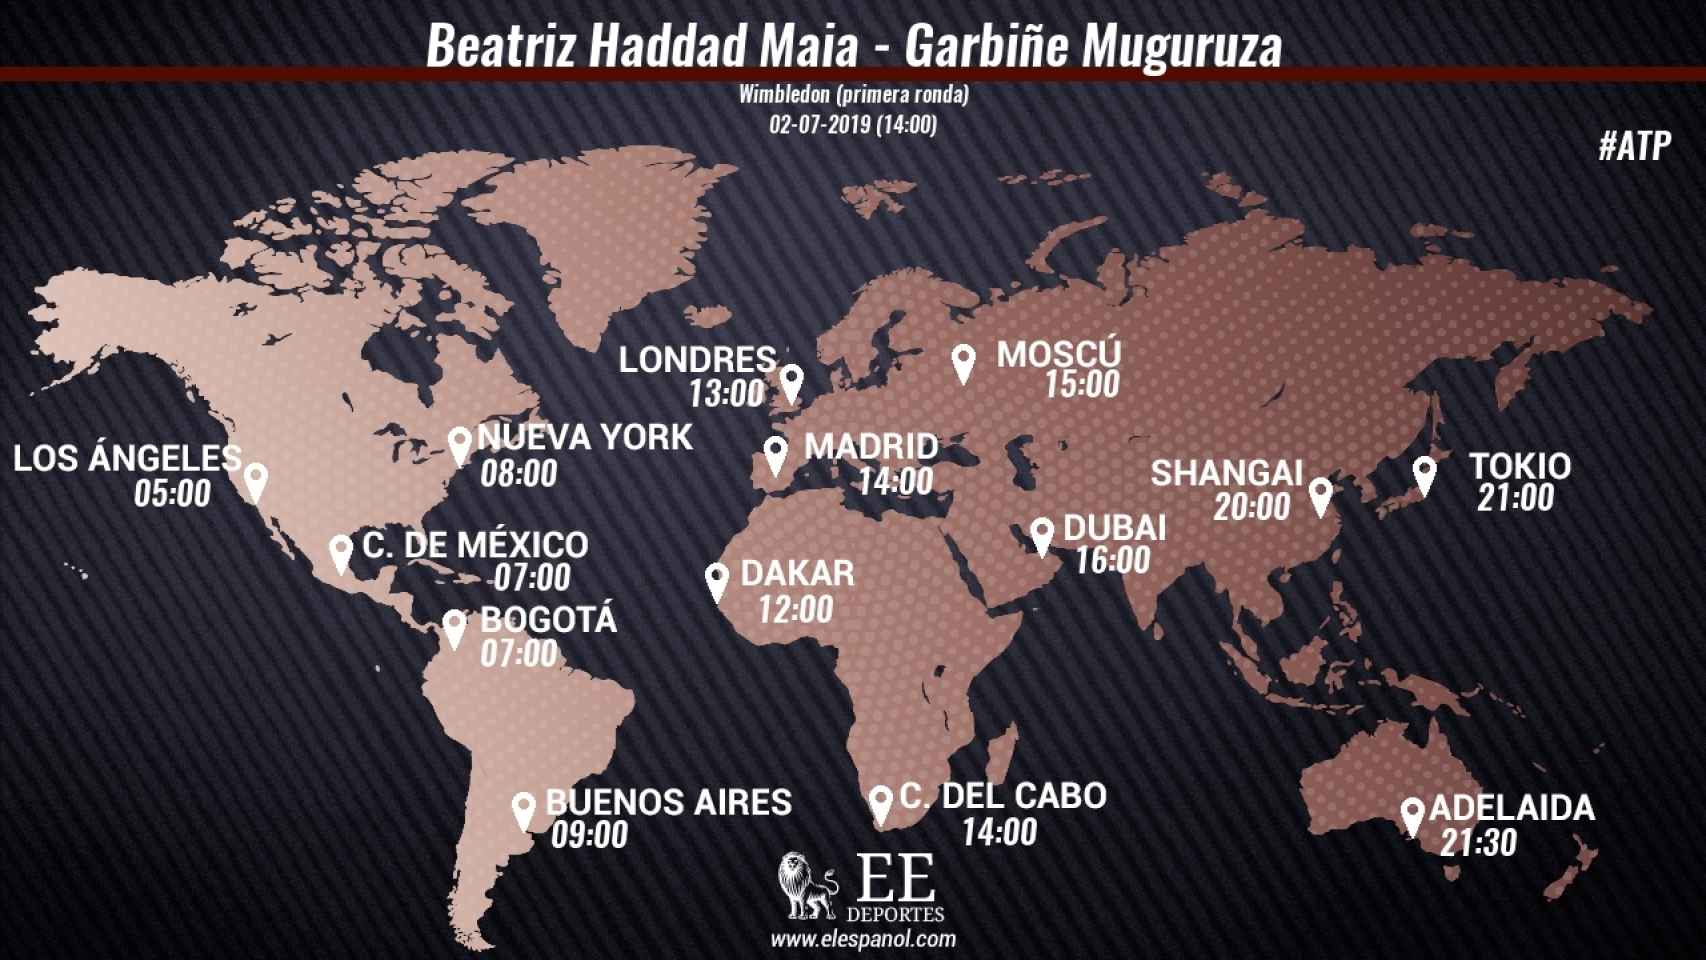 Horario Beatriz Haddad Maia - Garbiñe Muguruza